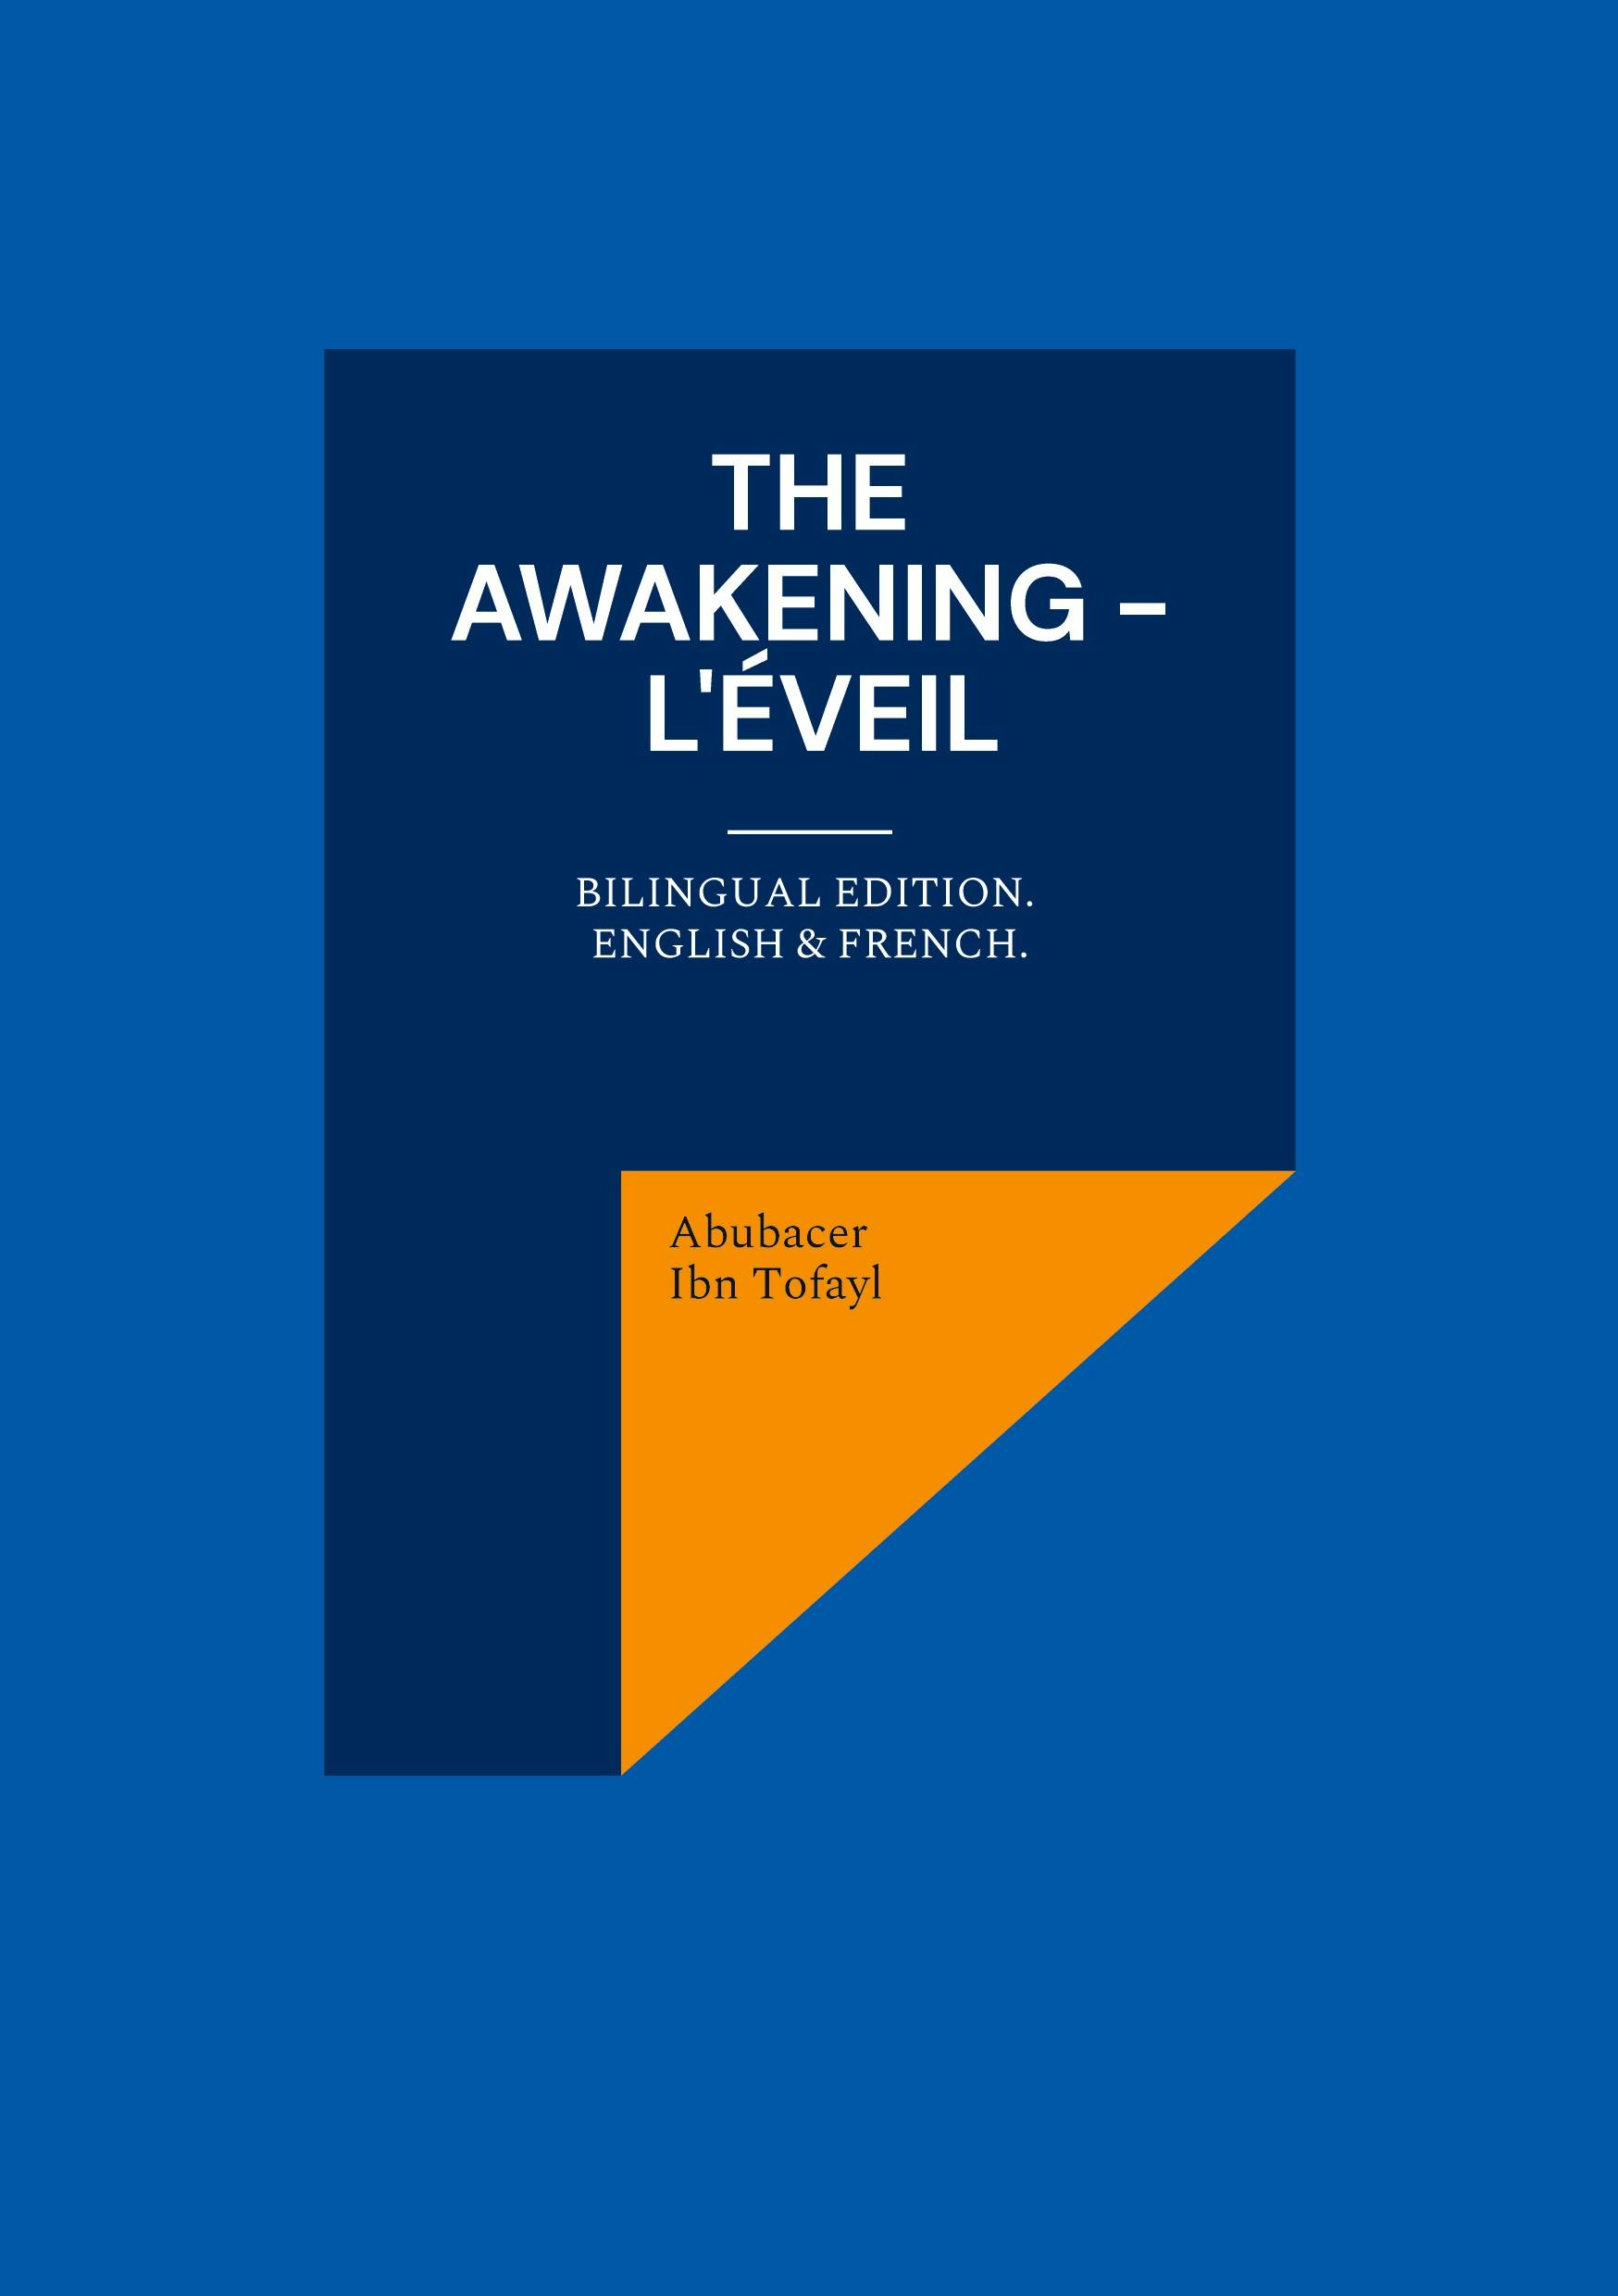 The awakening - L'éveil - Abubacer Ibn Tofayl